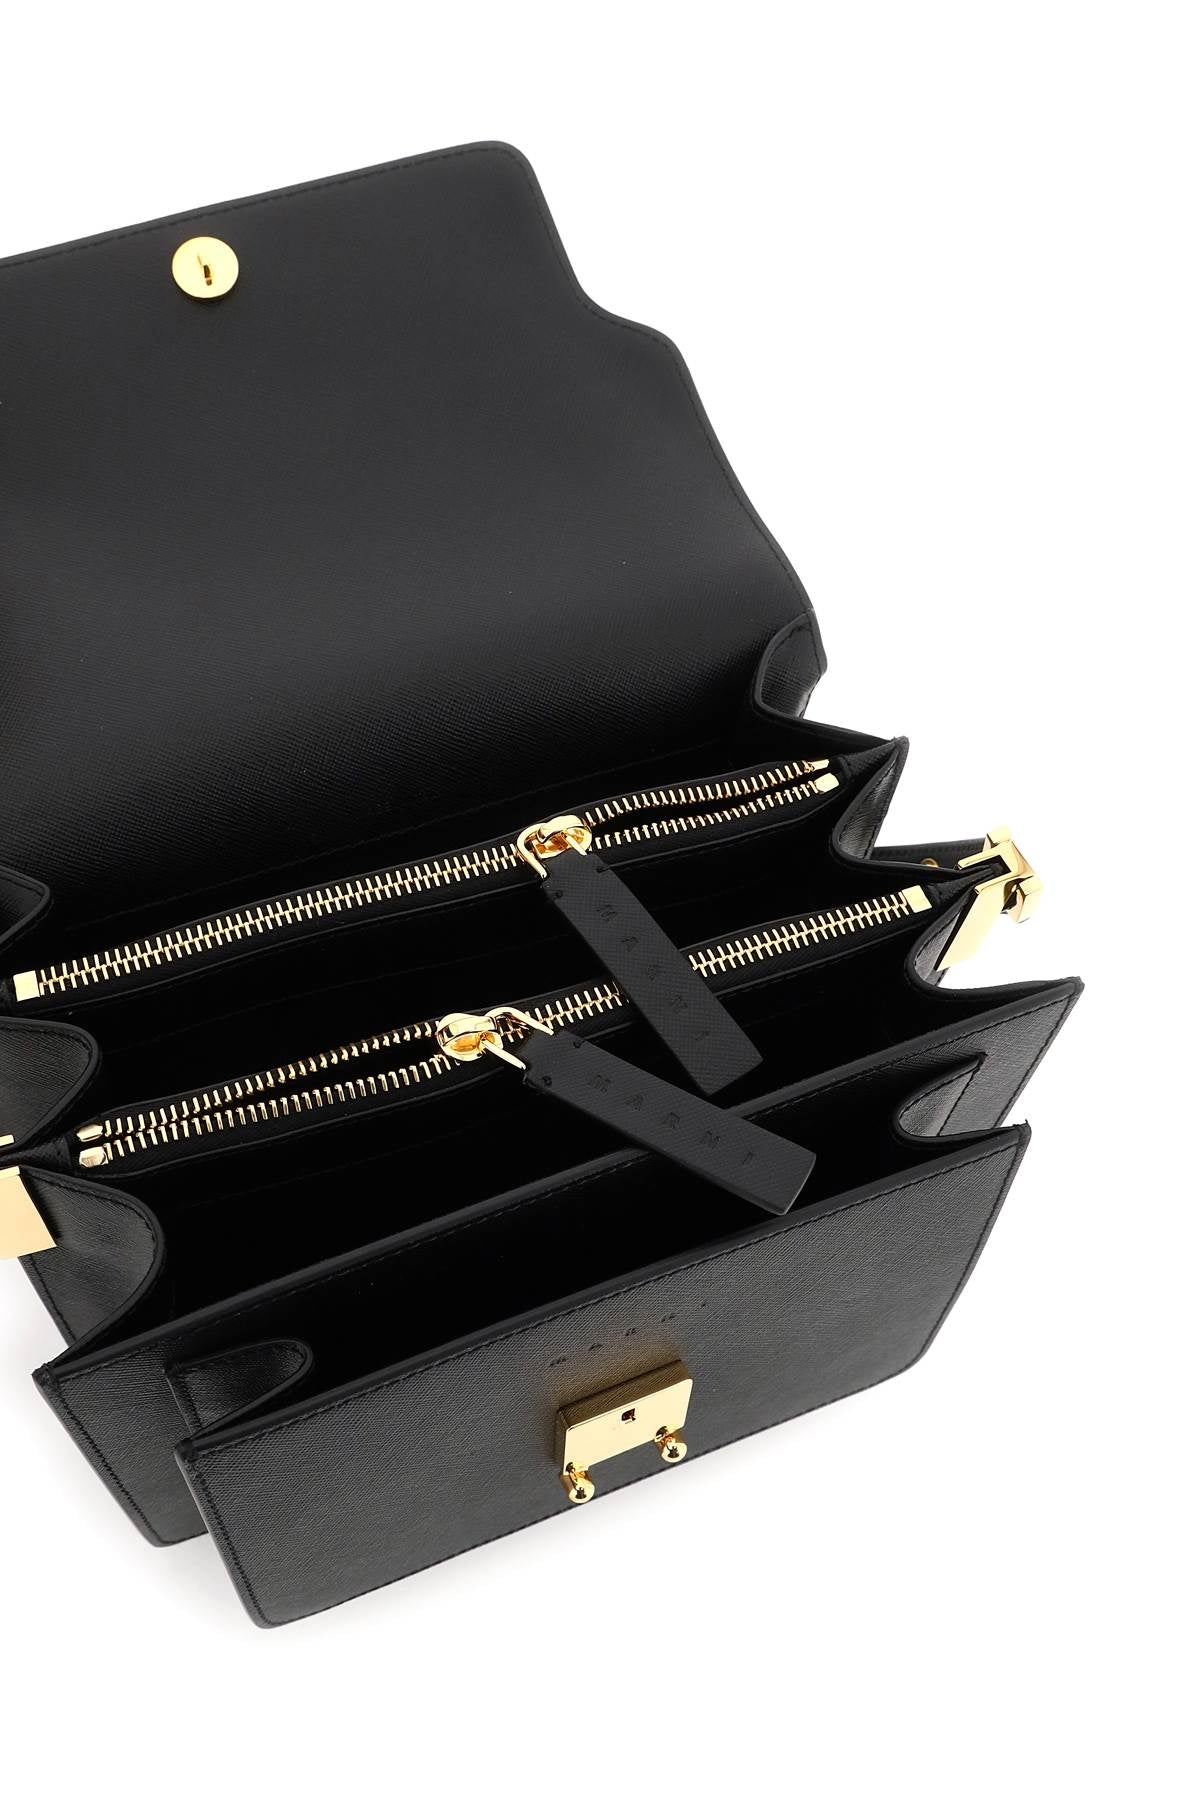 MARNI Black Accordion Handbag for Women - Saffiano Leather, Gold Trim, Multiple Compartments